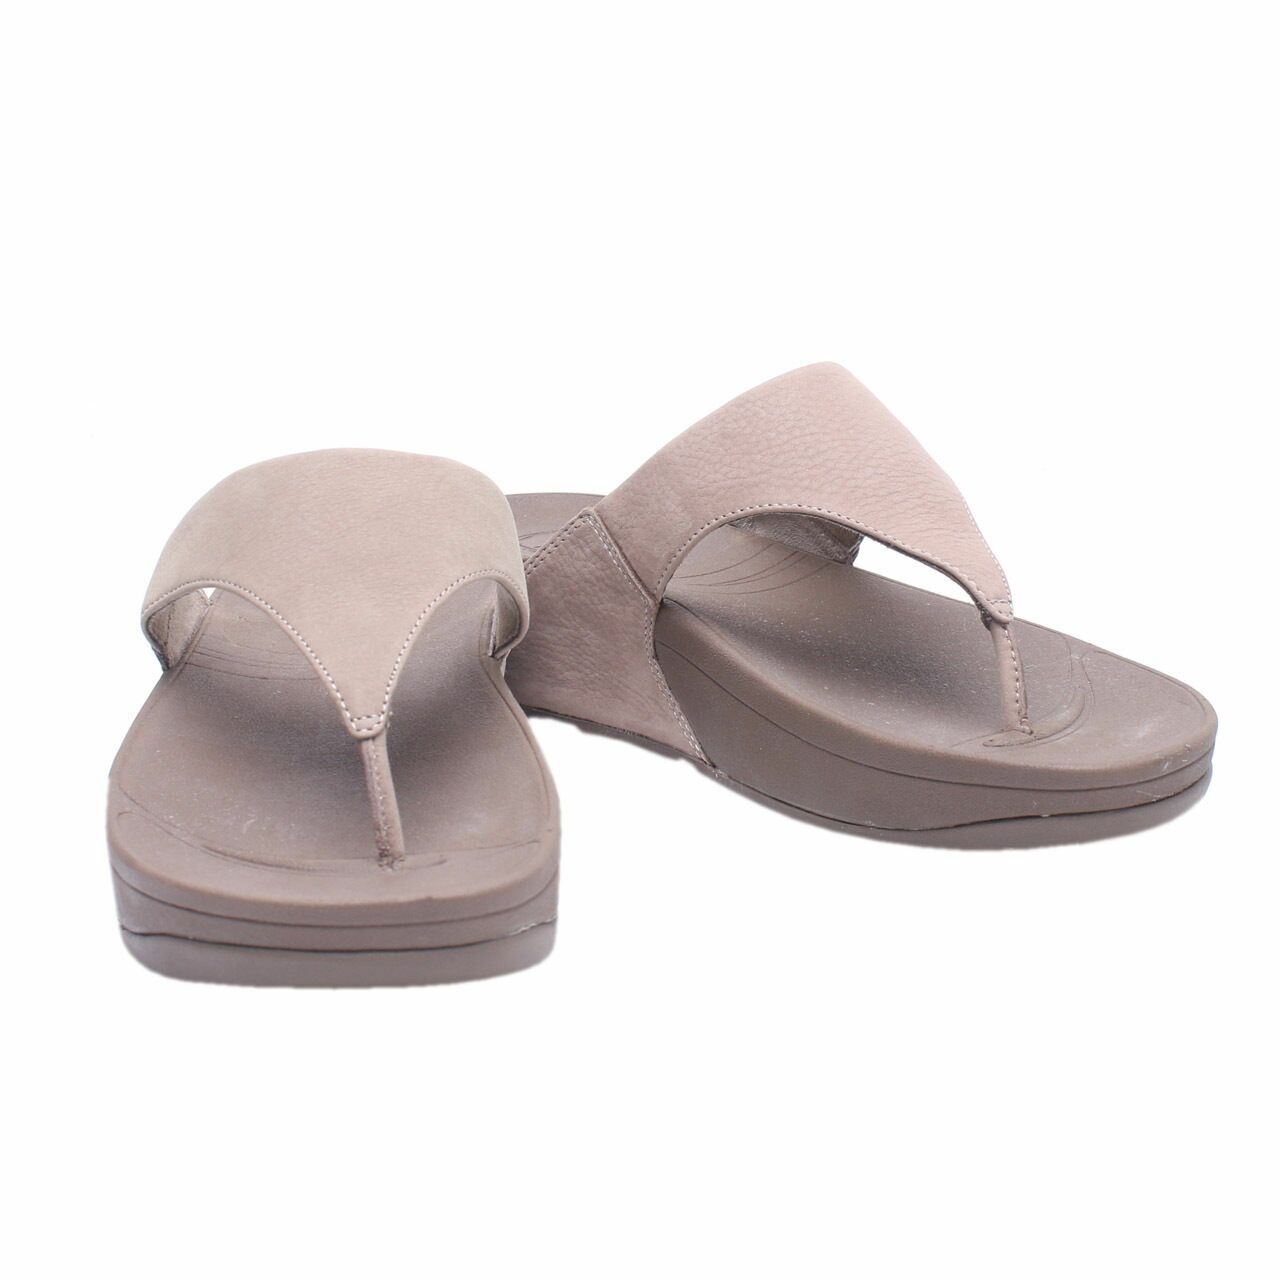 Fitflop Khaki Sandals